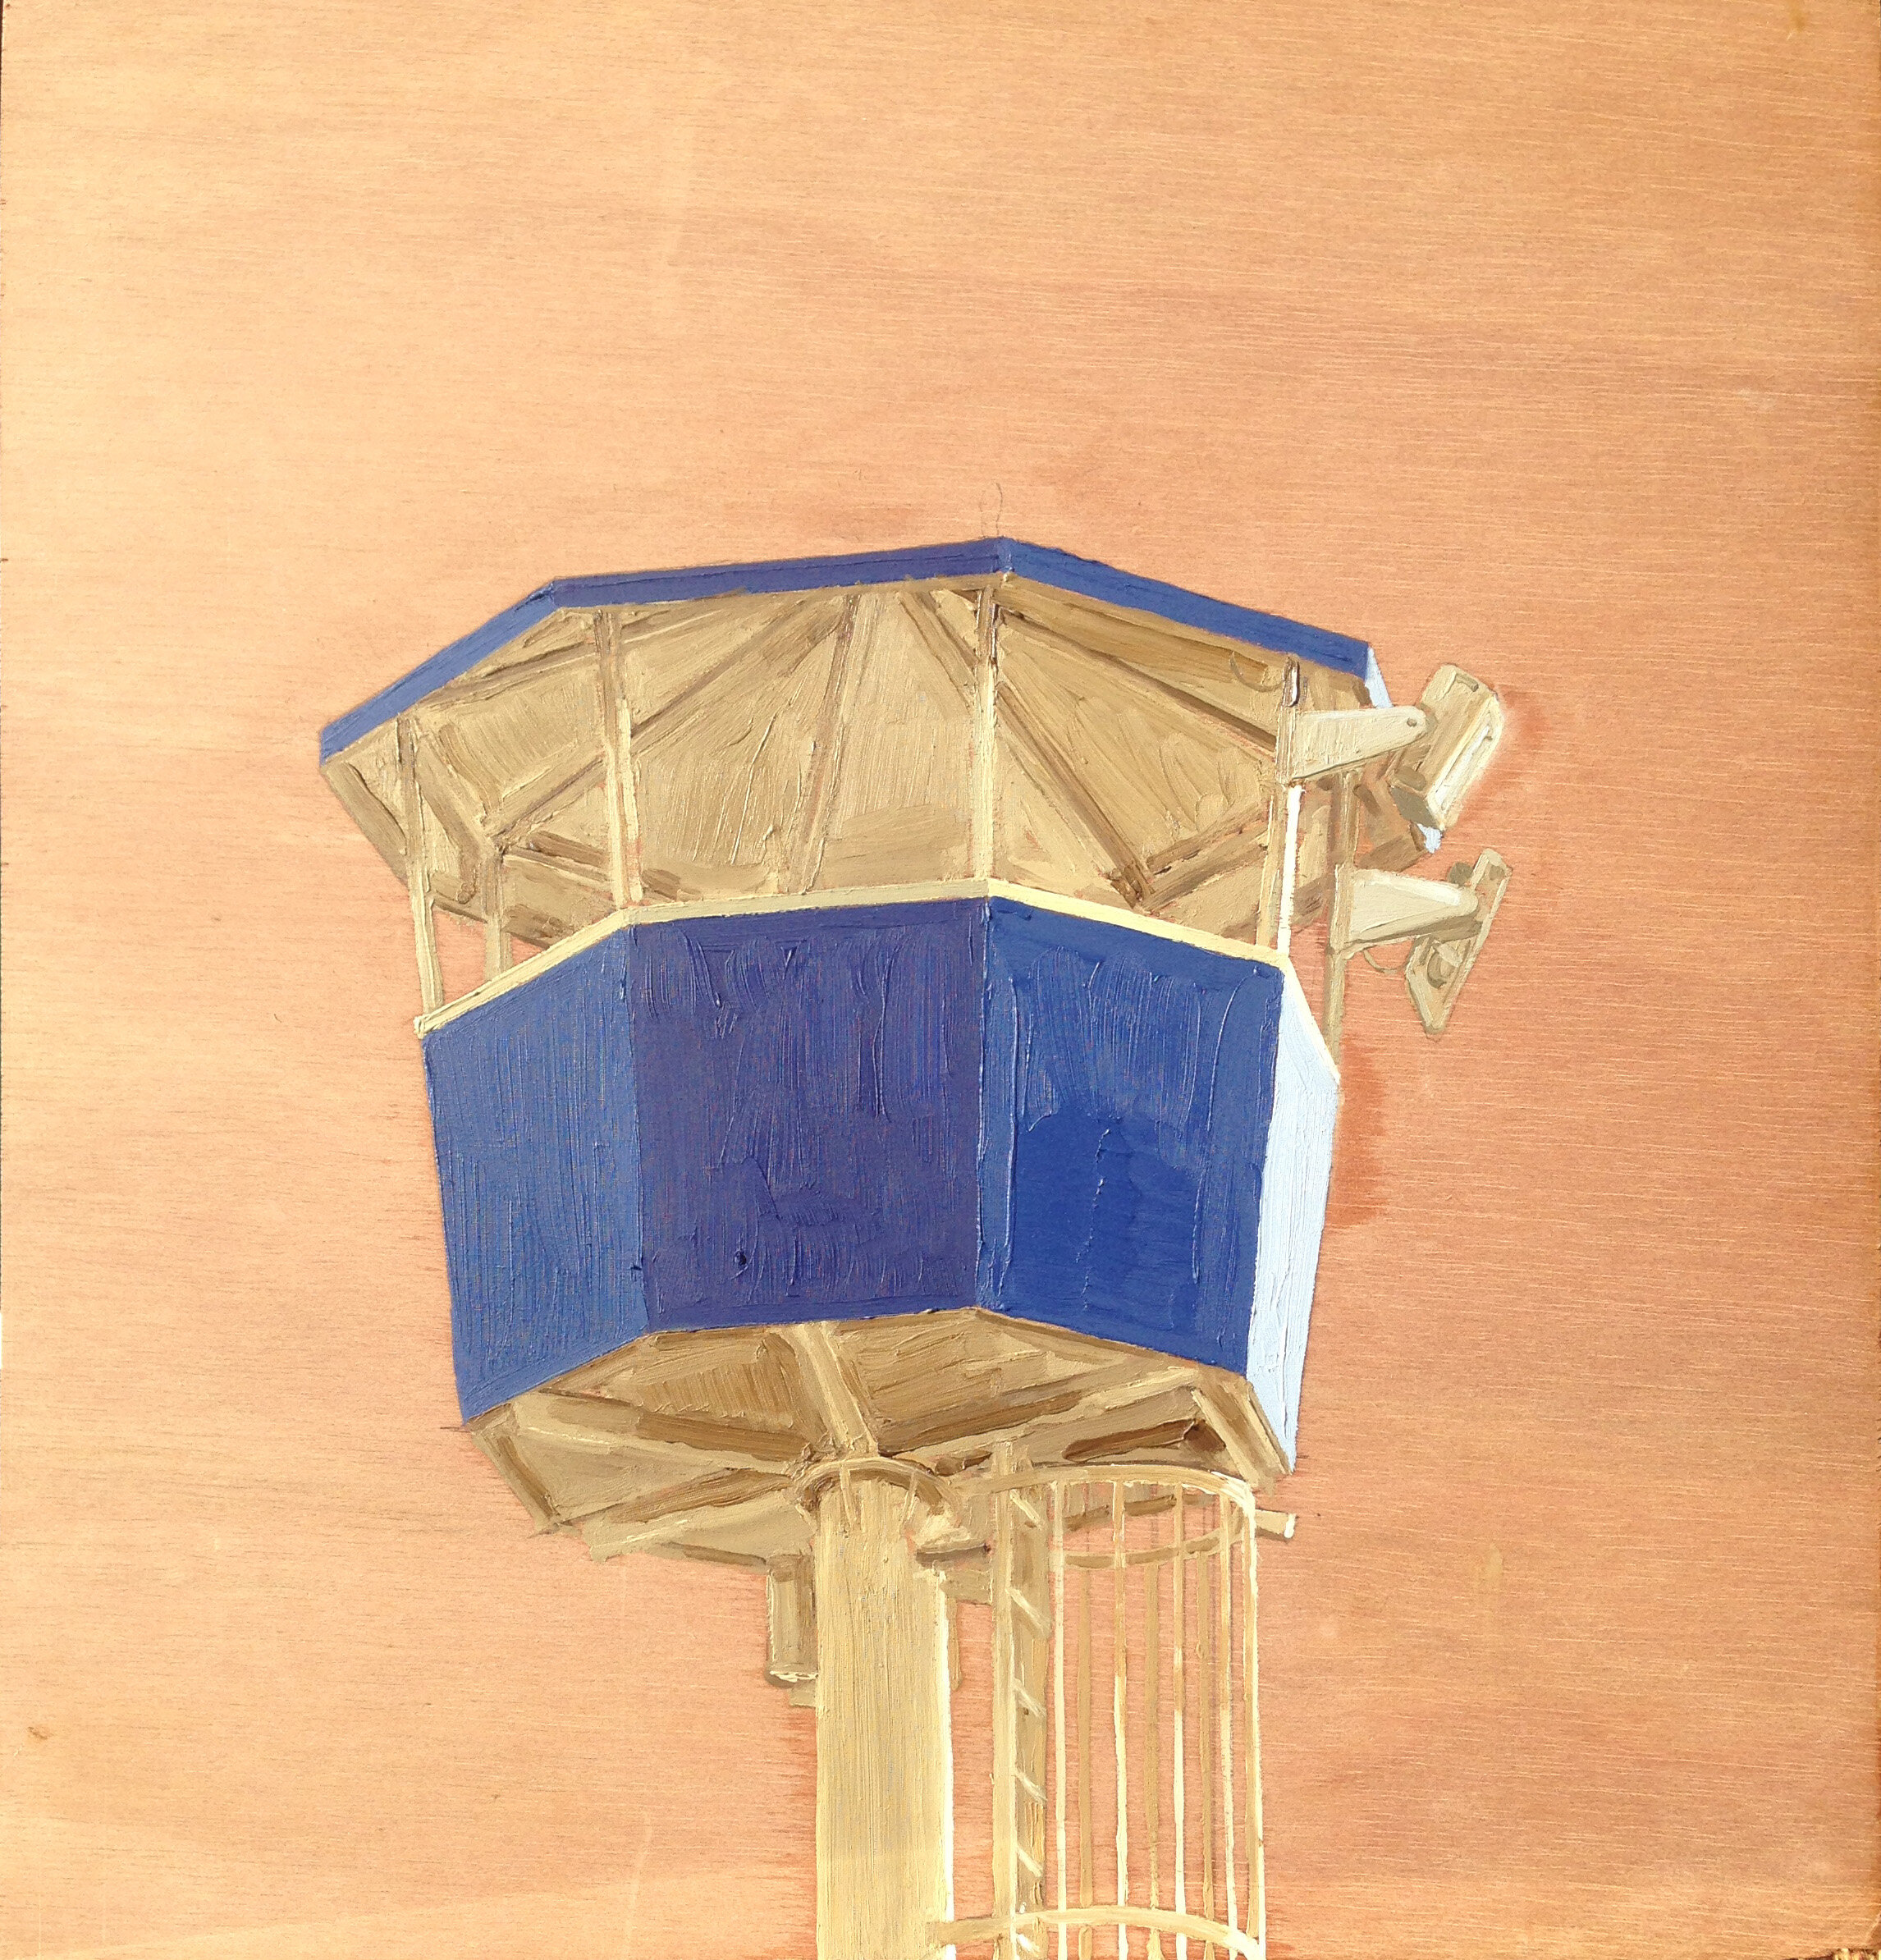 Deep Blue, 2016, Oil on Plywood, 28.5 x 27.5 cm